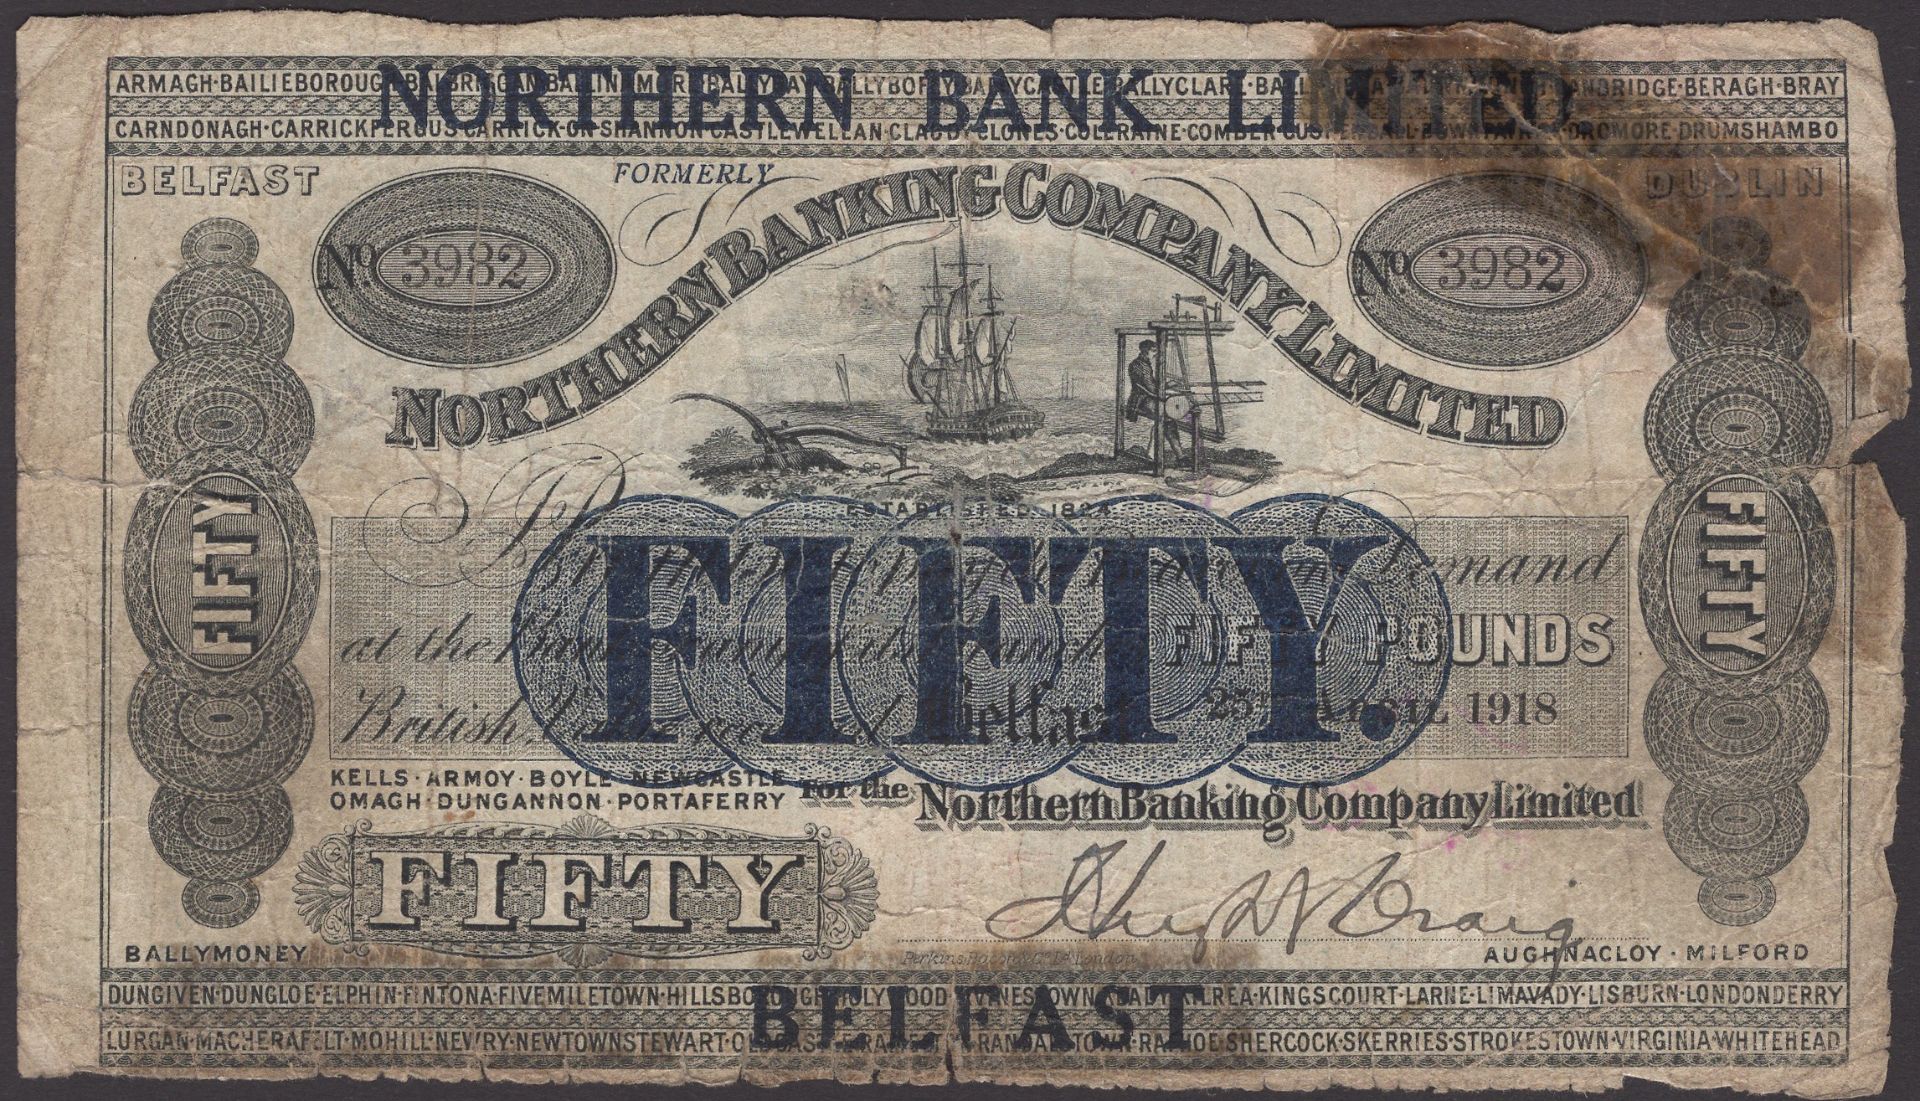 Northern Bank Limited, Â£50, 25 April 1918 (1929), serial number 3982, Craig signature, large...